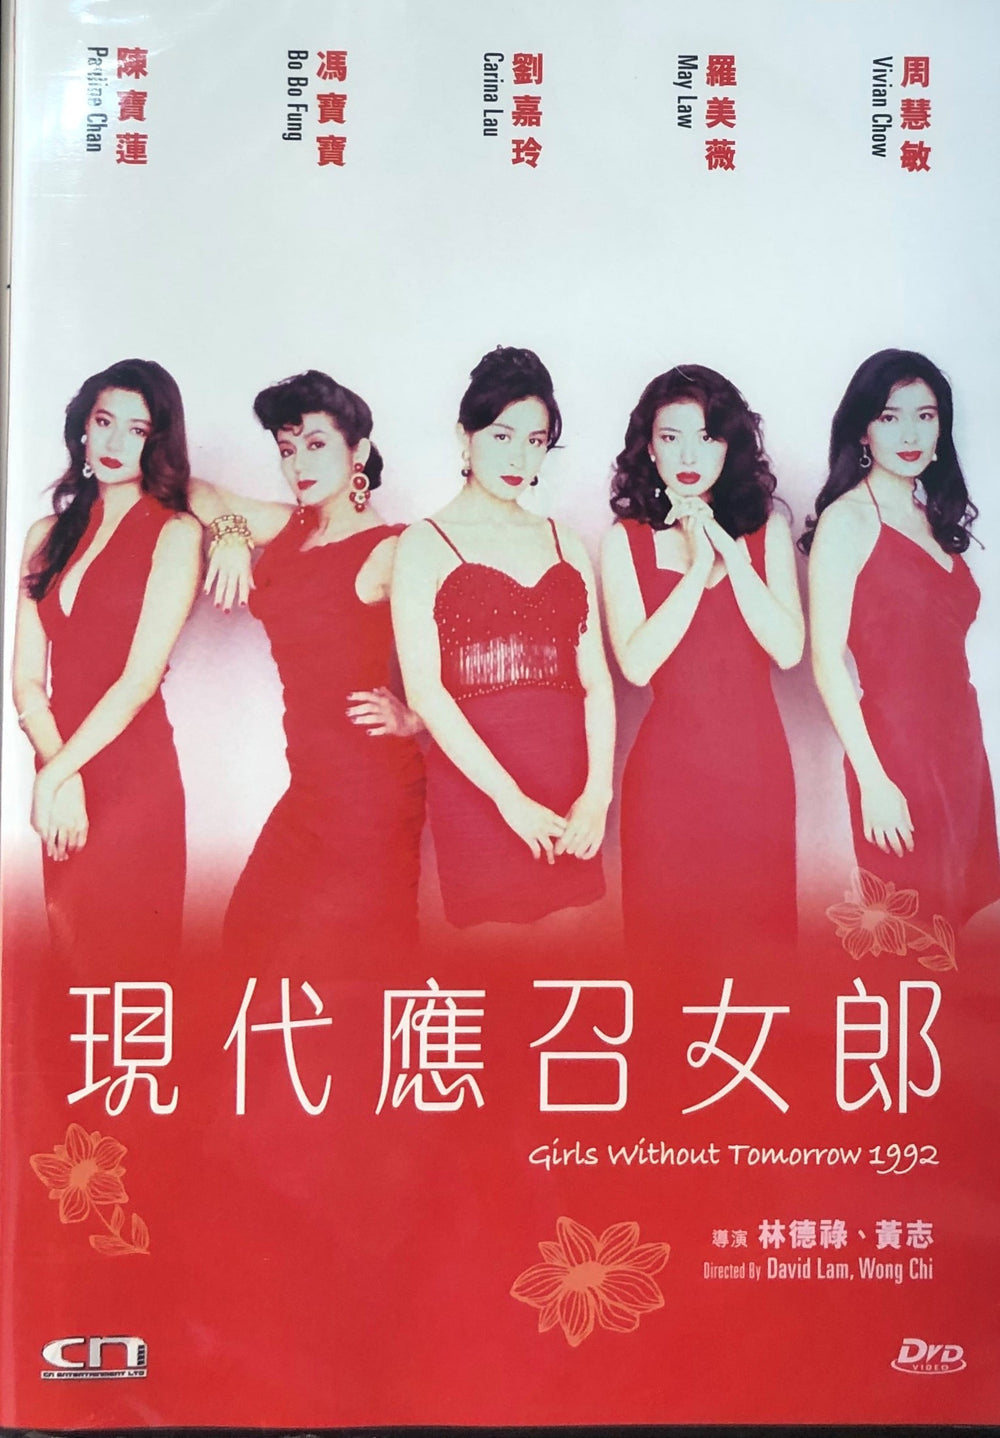 GIRLS WITHOUT TOMORROW 現代應召女郎 1992 (H.K MOVIE) DVD ENGLISH SUB (REGION FREE)